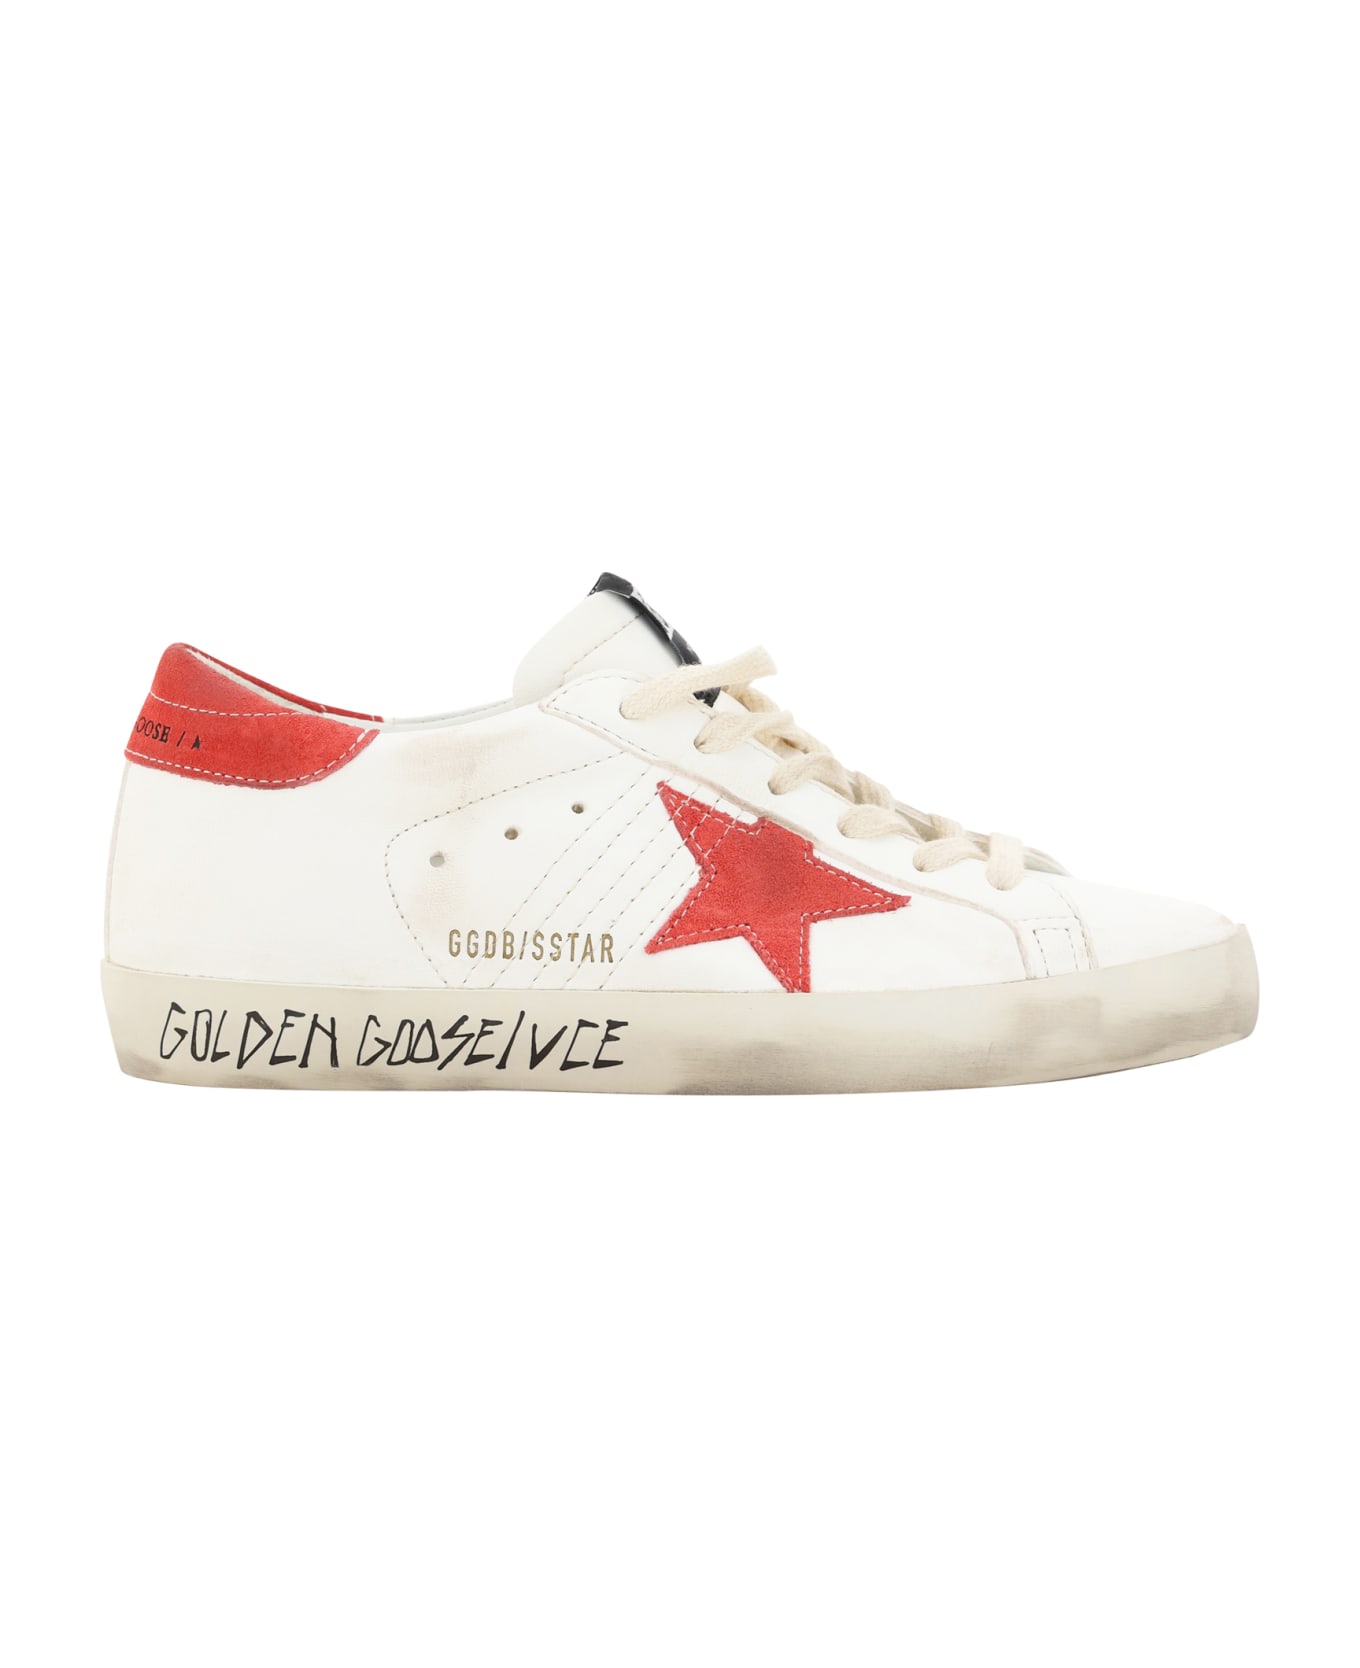 Golden Goose Superstar Classic Leather Sneakers - Cream/Fucsia スニーカー